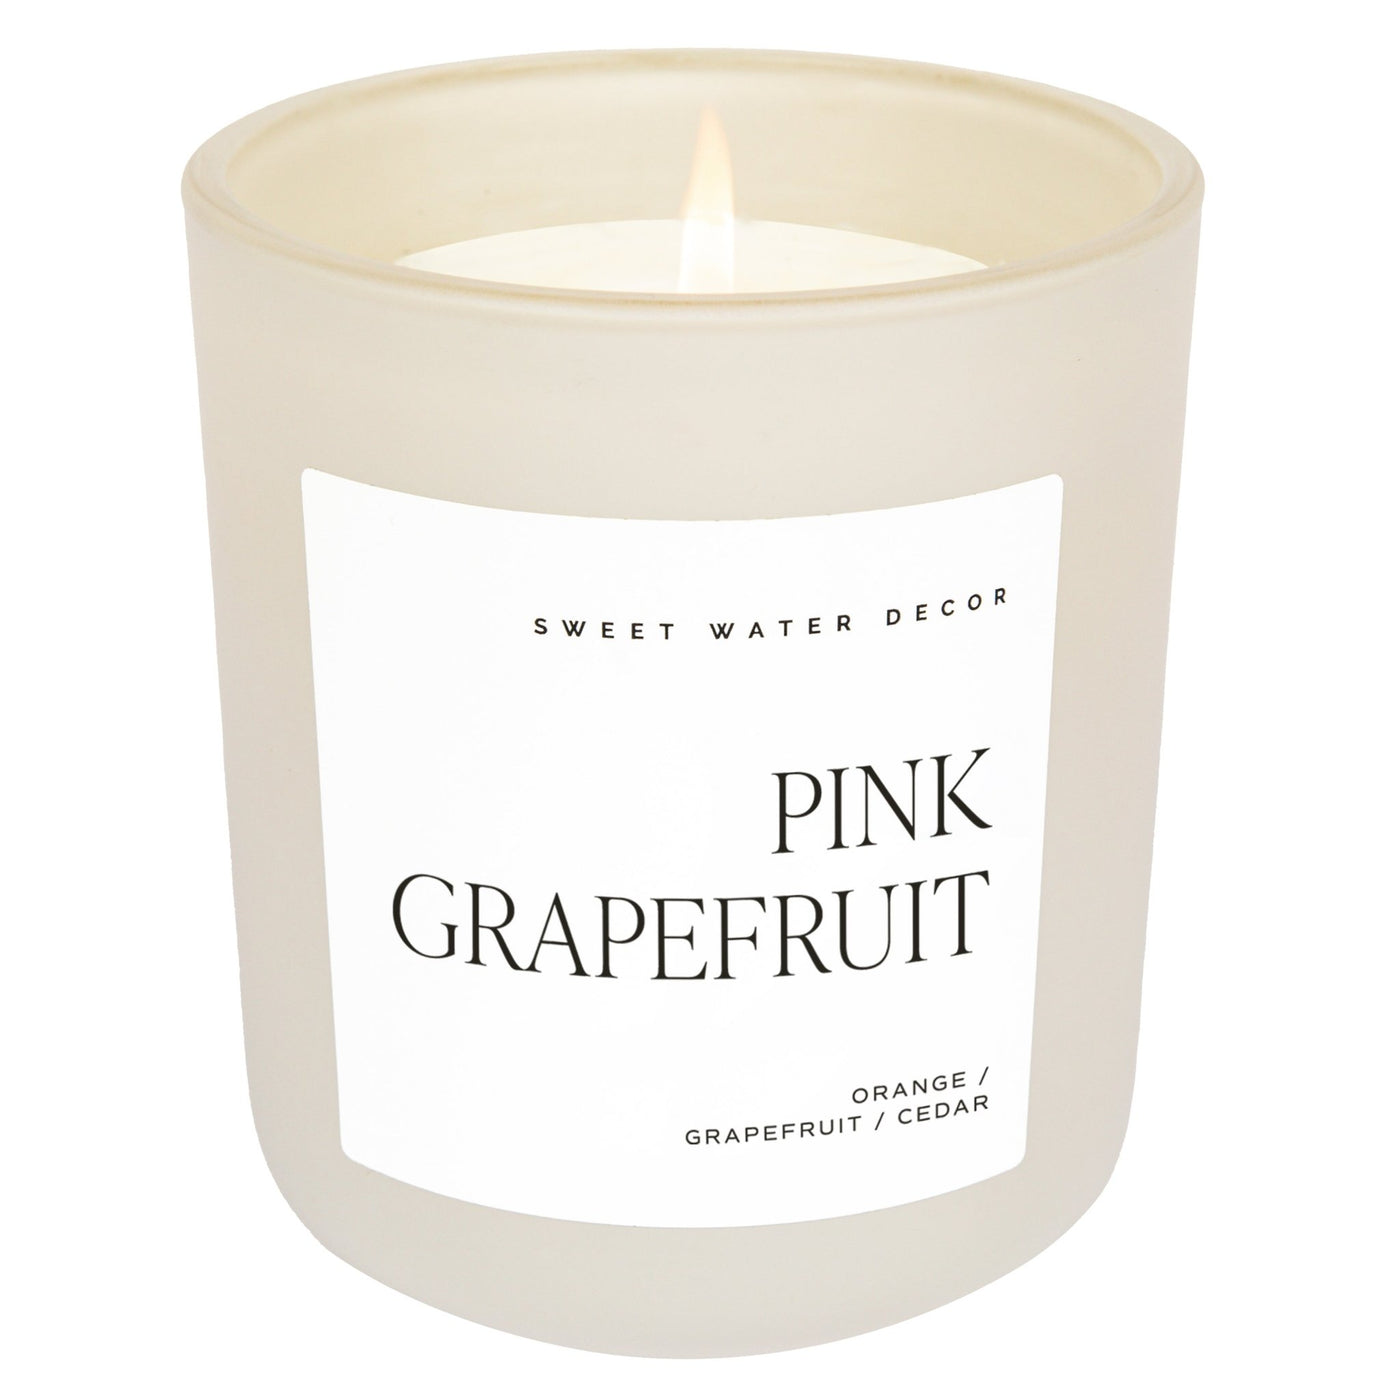 Pink Grapefruit Soy Candle - Tan Matte Jar - 15 oz - Sweet Water Decor - Candles